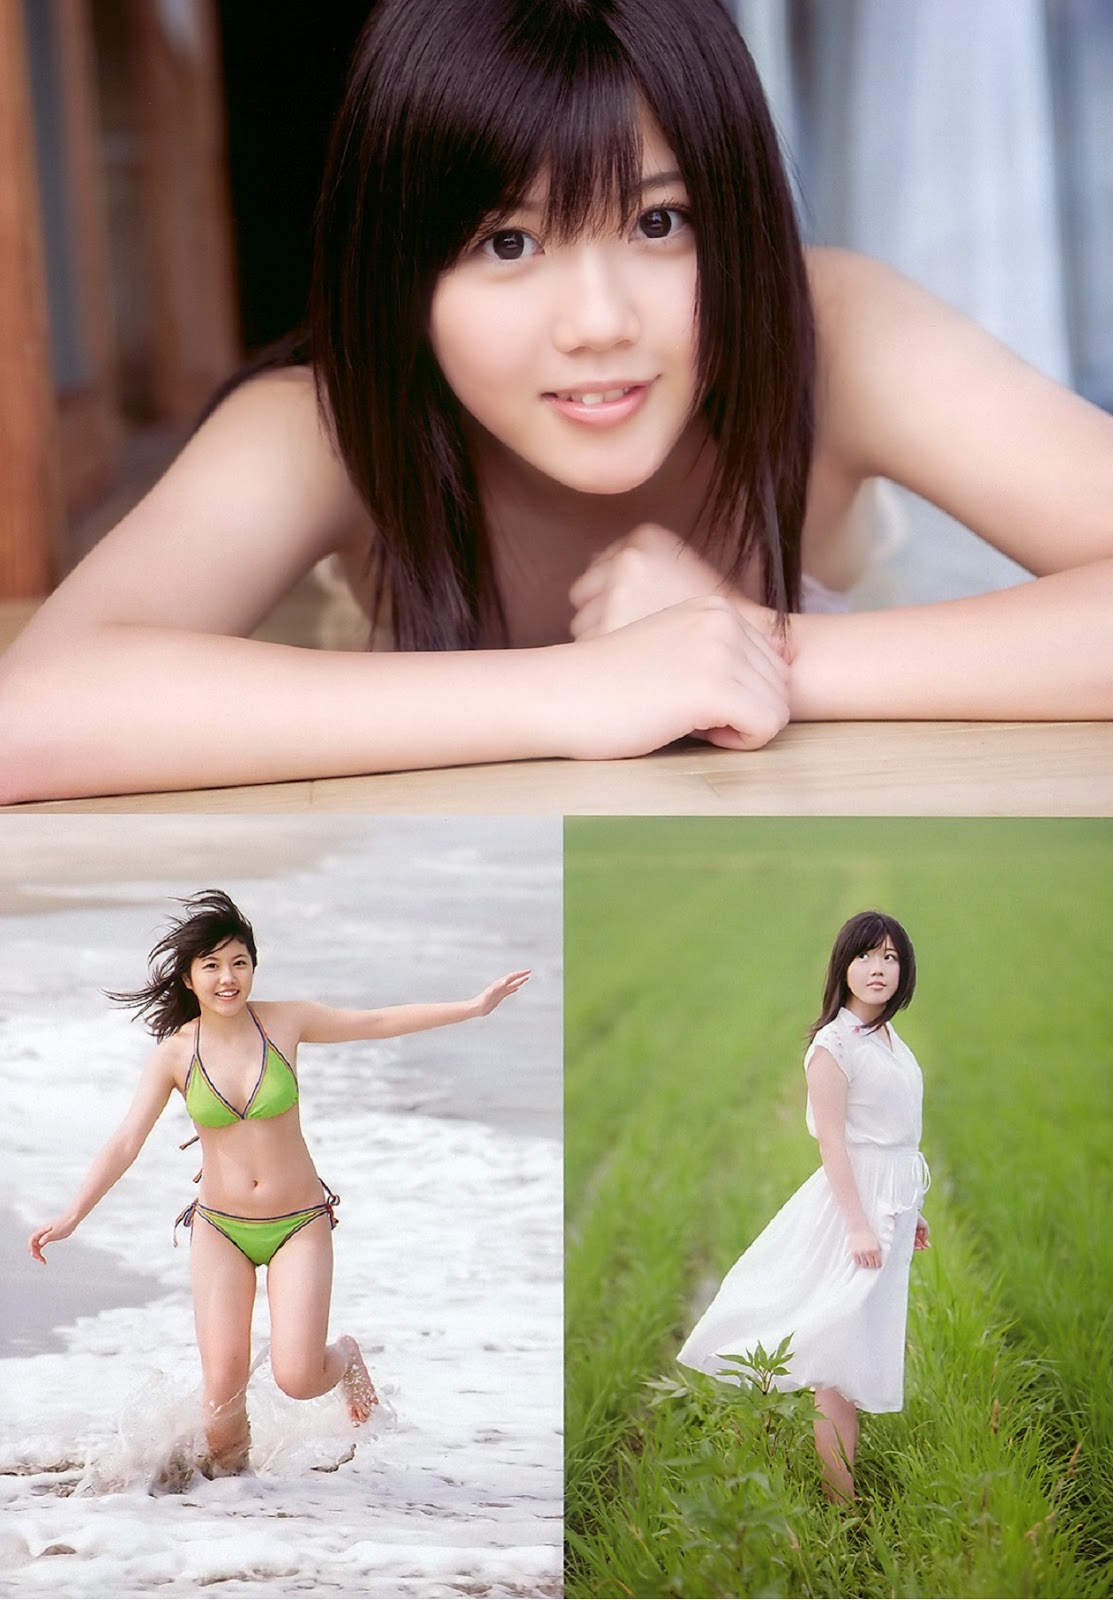 Kaneko Nude 31 Office Girls Wallpaper